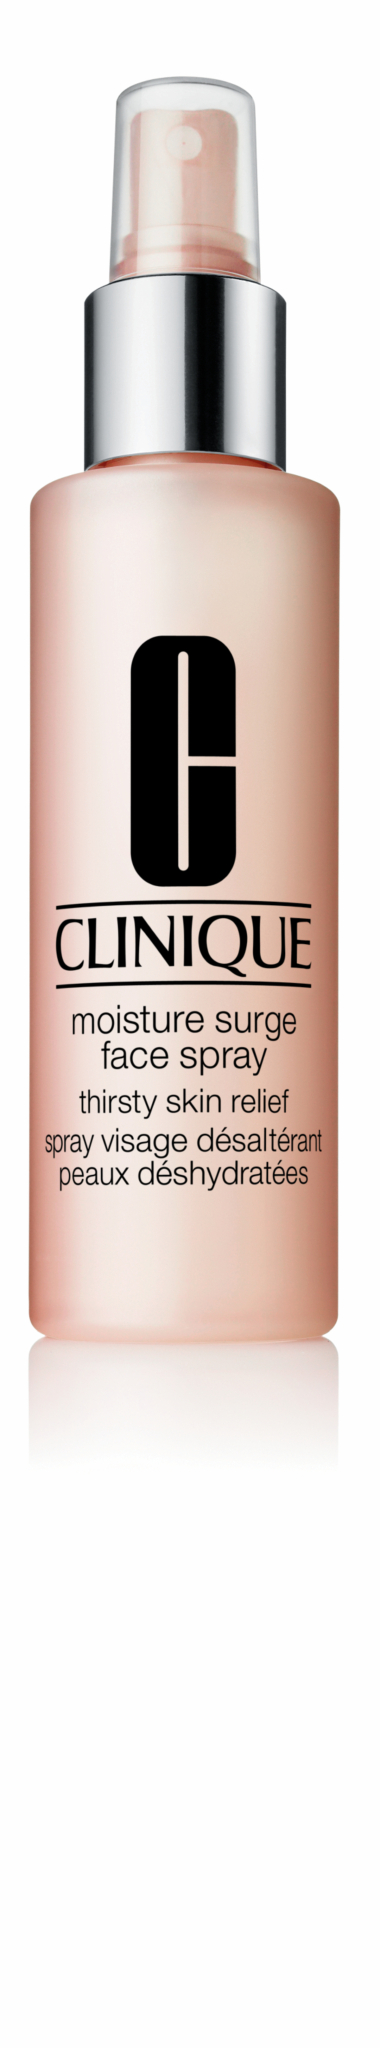  Moisture Surge Face Spray